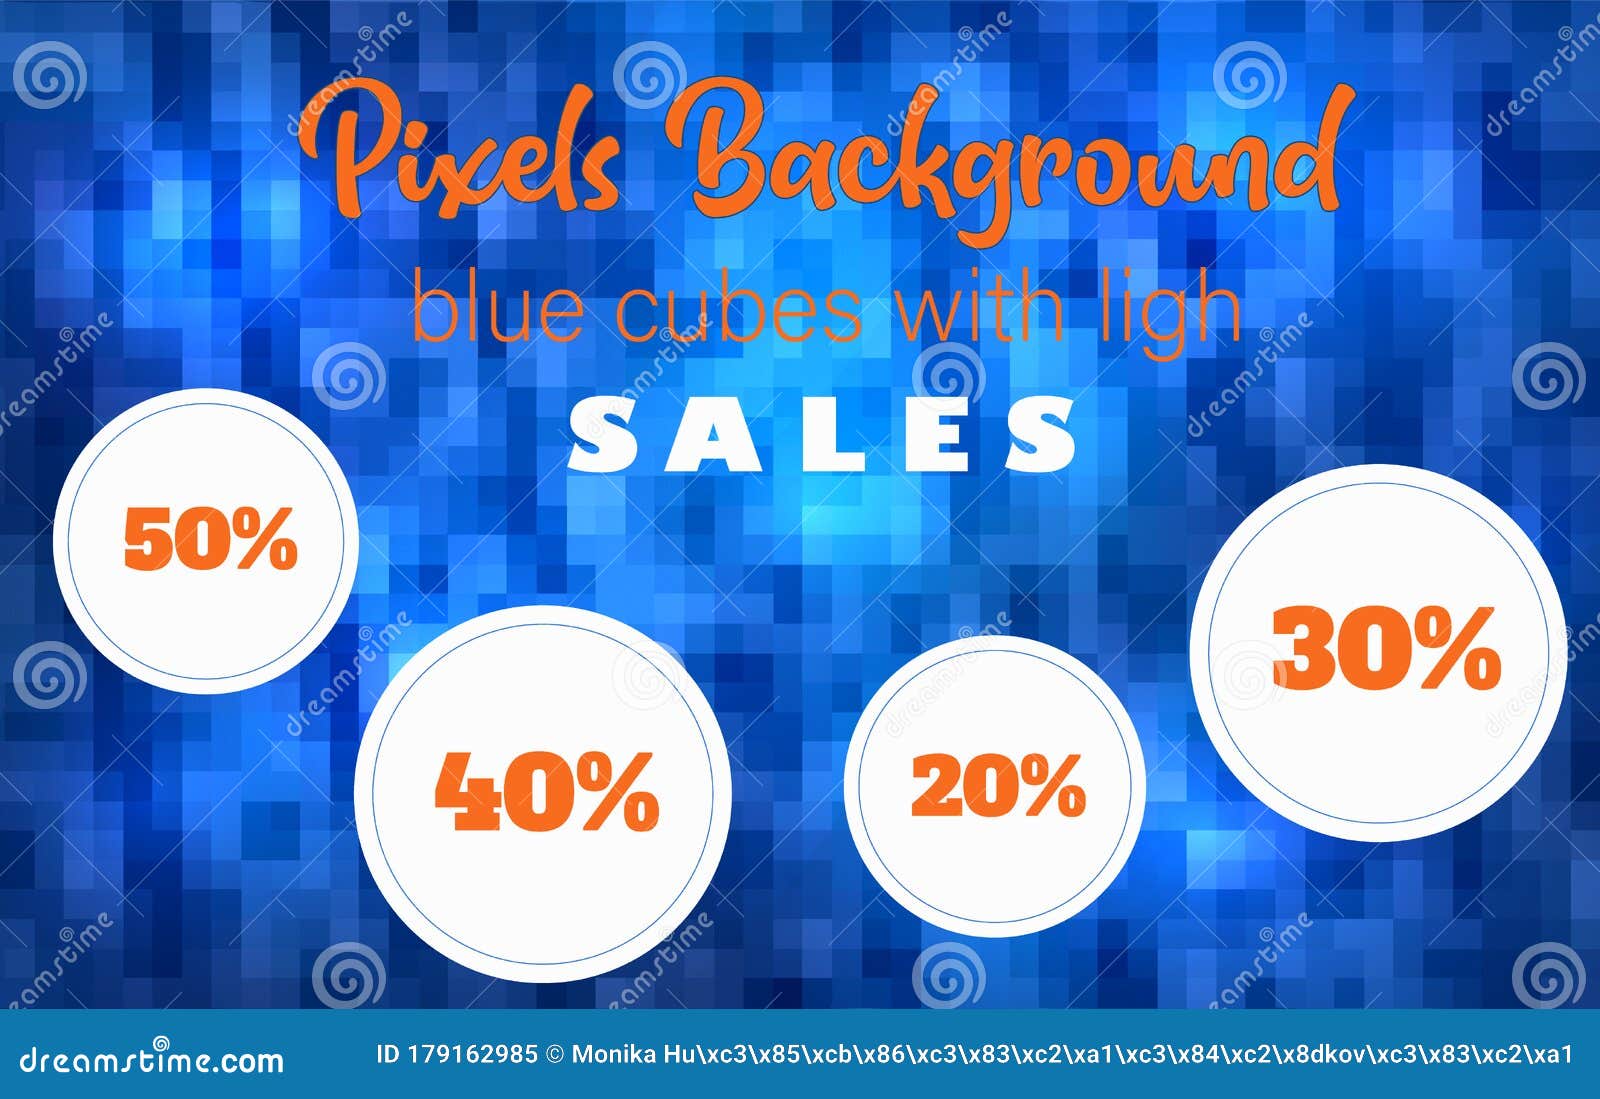 pixels background, sale discount, blue cubes with ligh